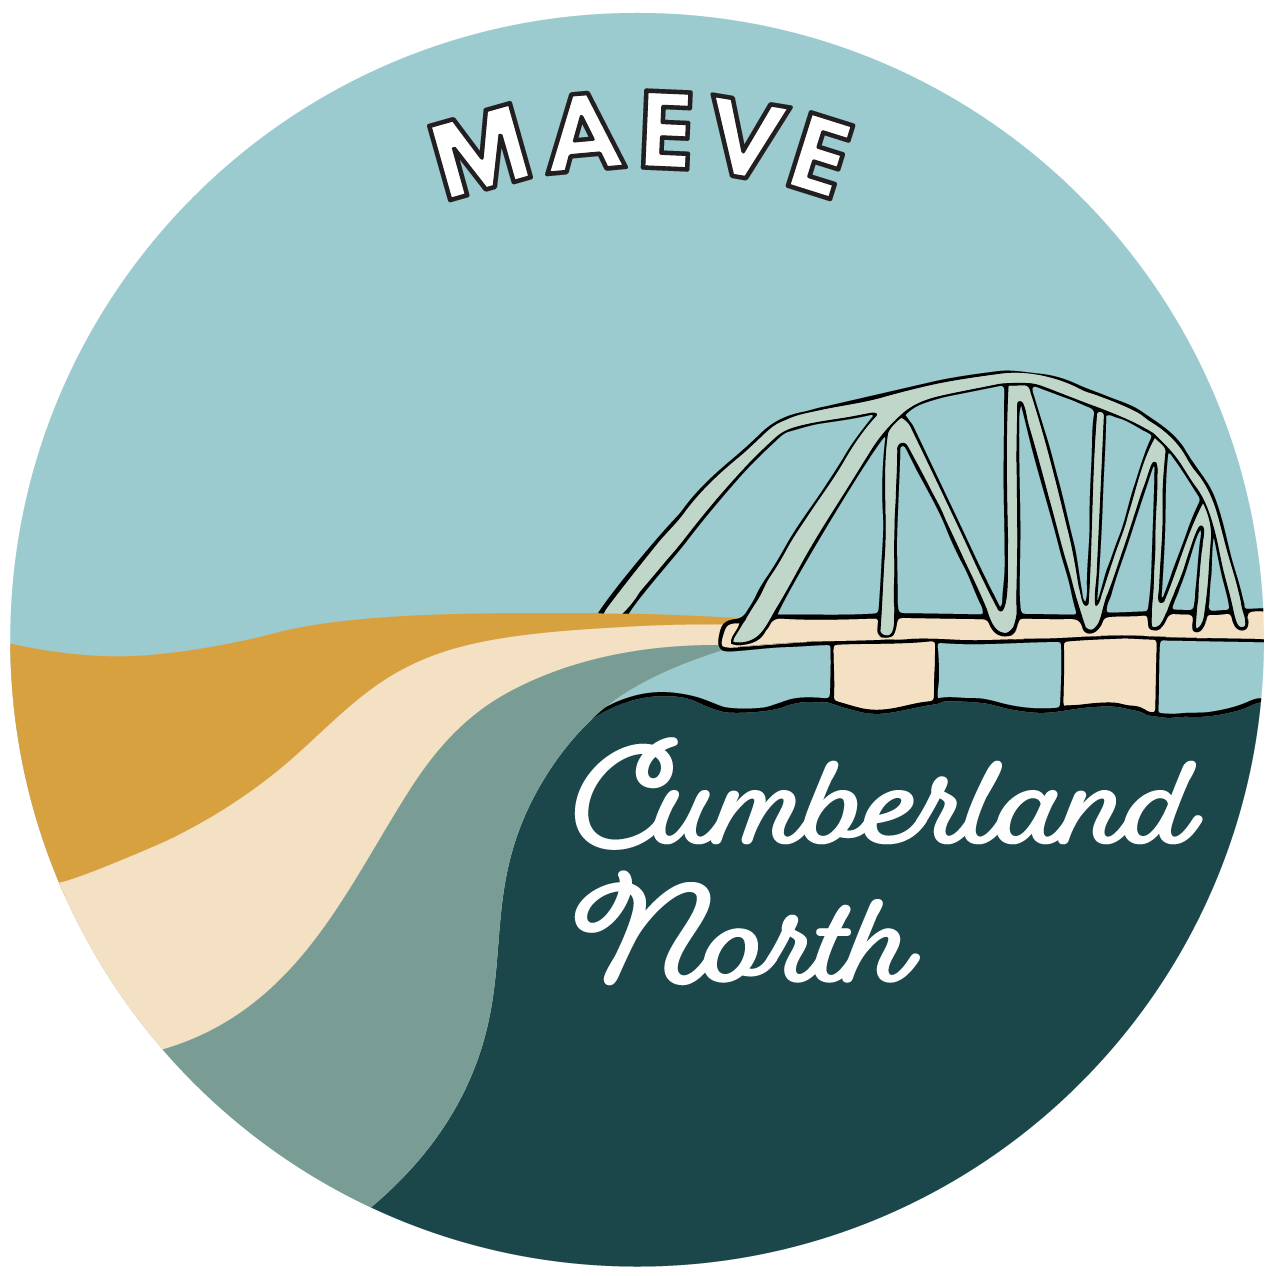 MAEVE Cumberland North